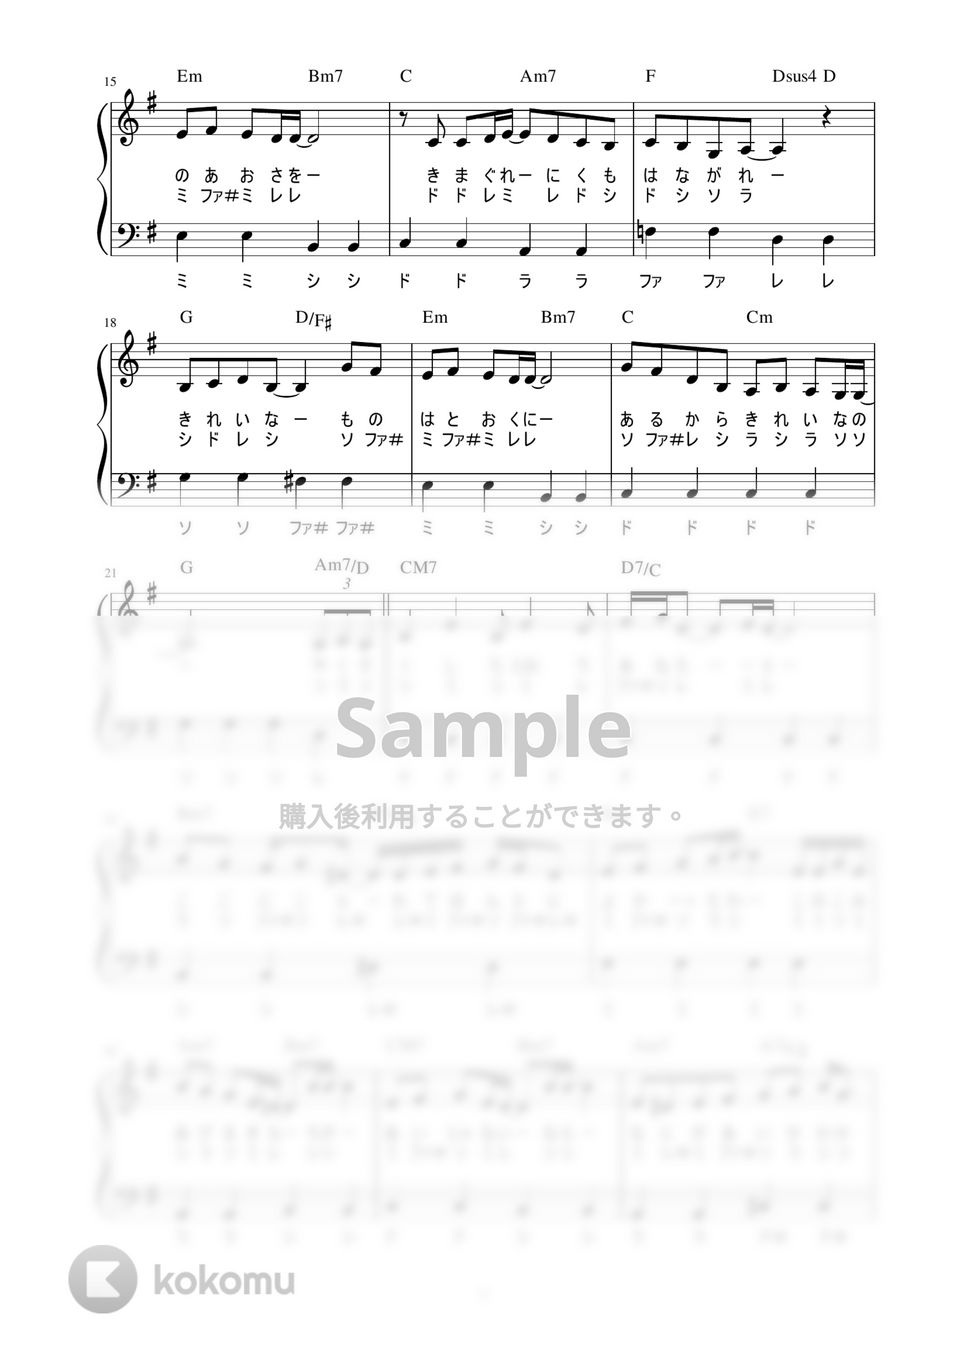 Superfly - 愛をこめて花束を (かんたん / 歌詞付き / ドレミ付き / 初心者) by piano.tokyo